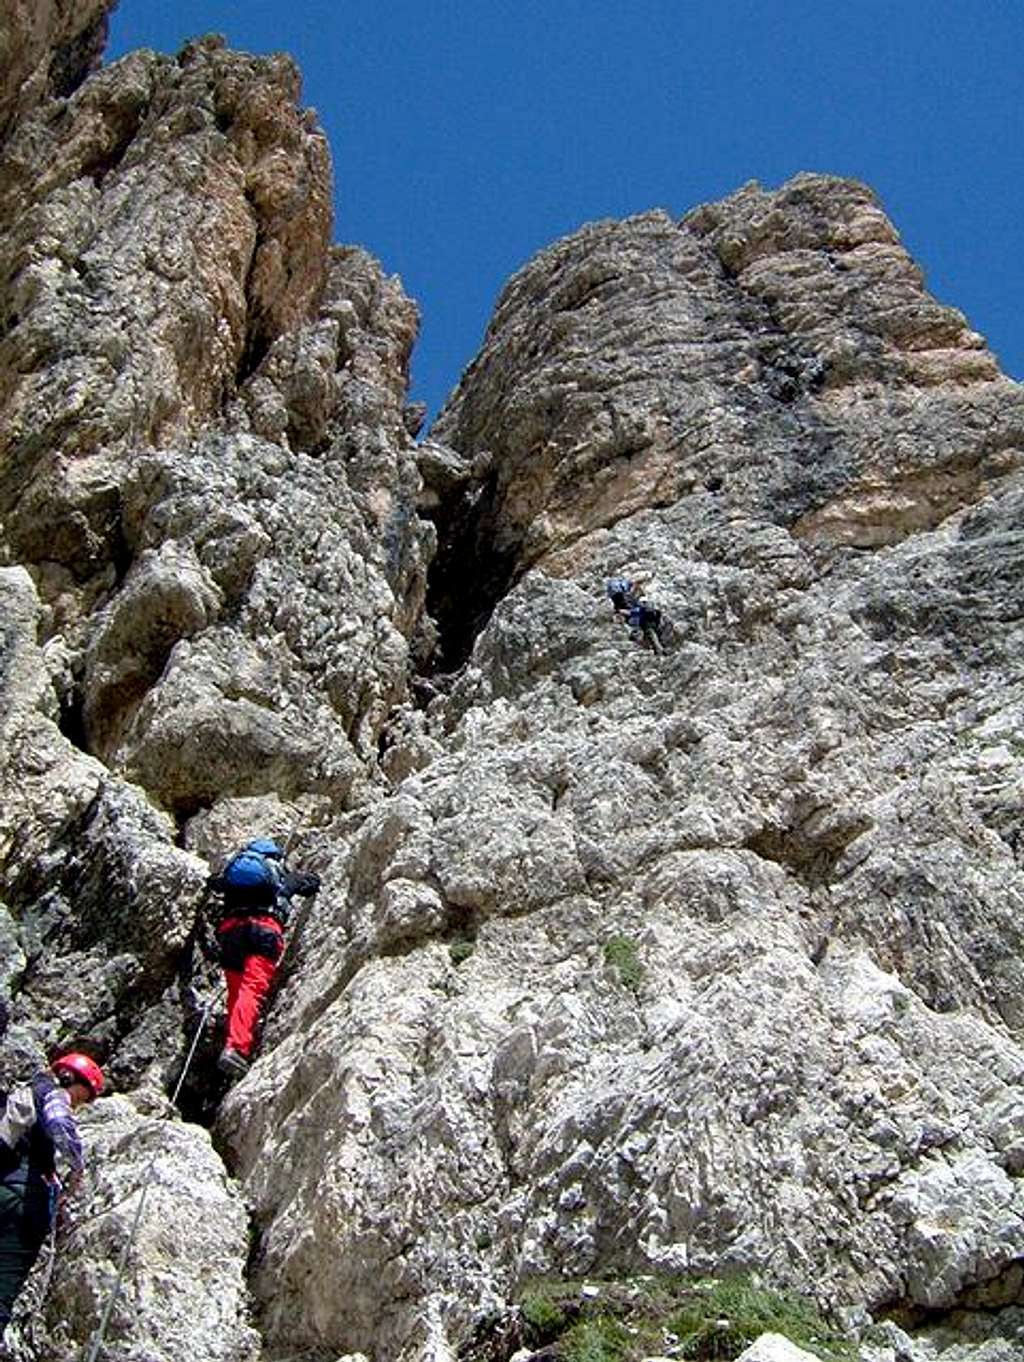 Not very difficult climbing...